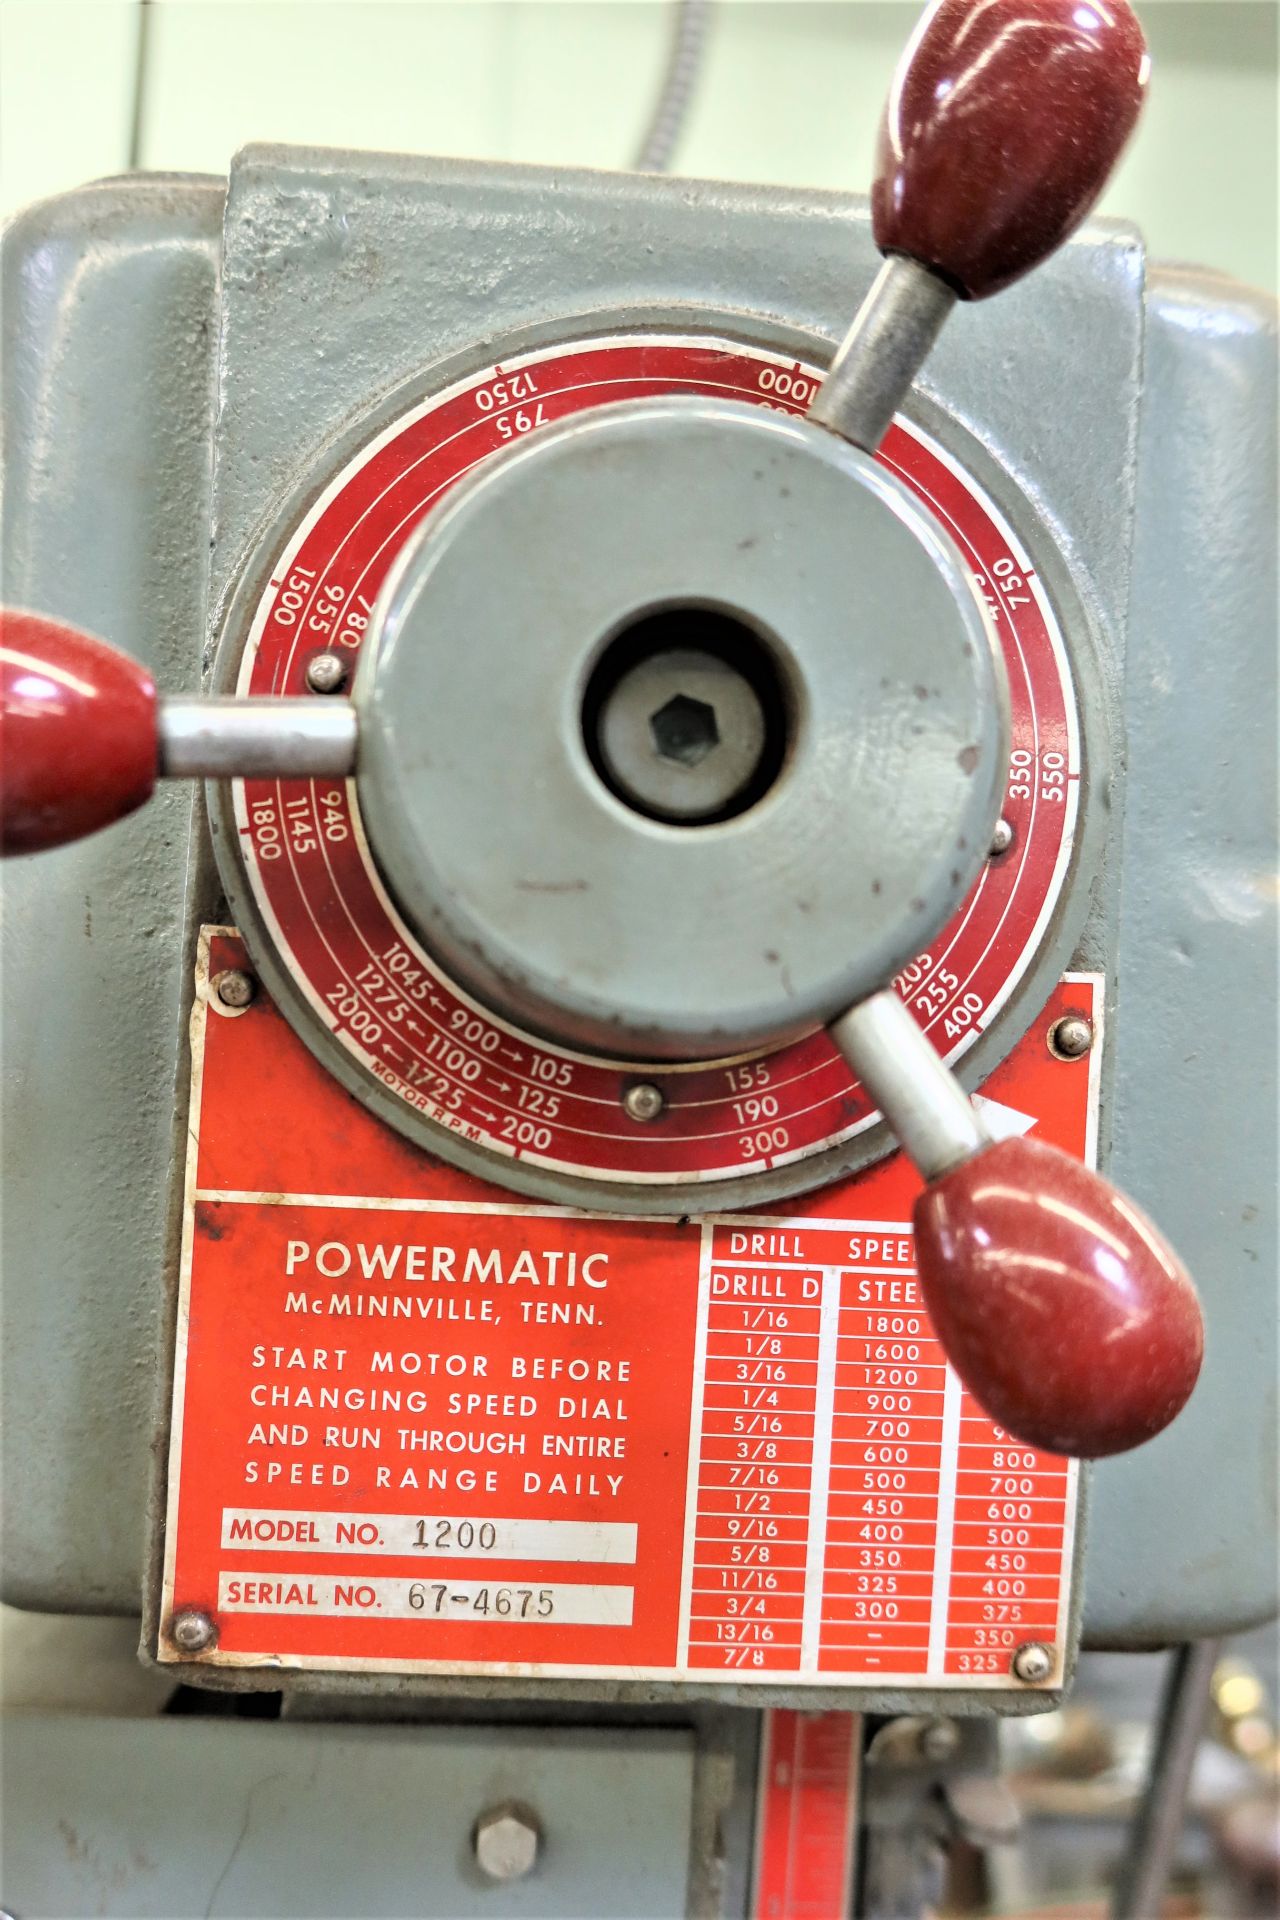 20" Powermatic Floor Standing Drill Press Model 1200, S/N 67-4675 - Image 2 of 3